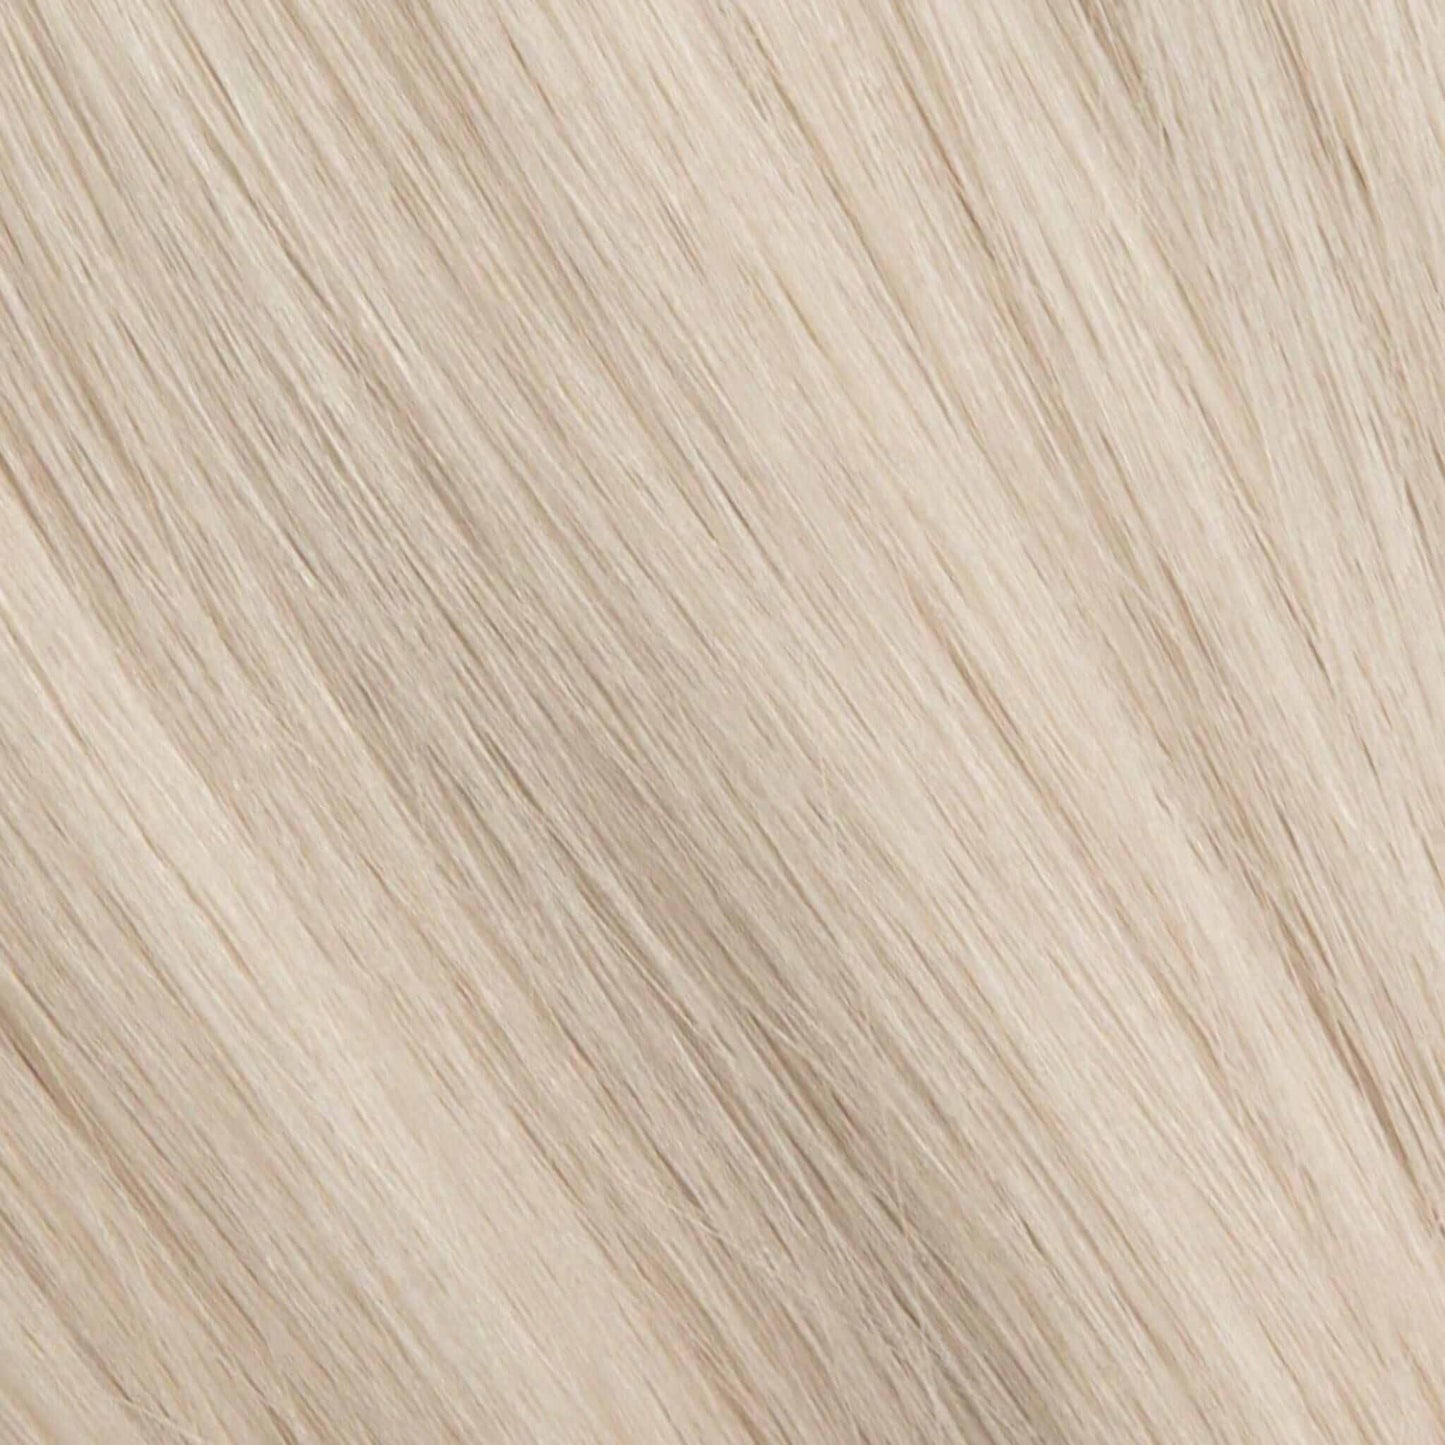 Genius (Micro) Weft 24" 94g Single Donor Virgin - #80 White Blonde